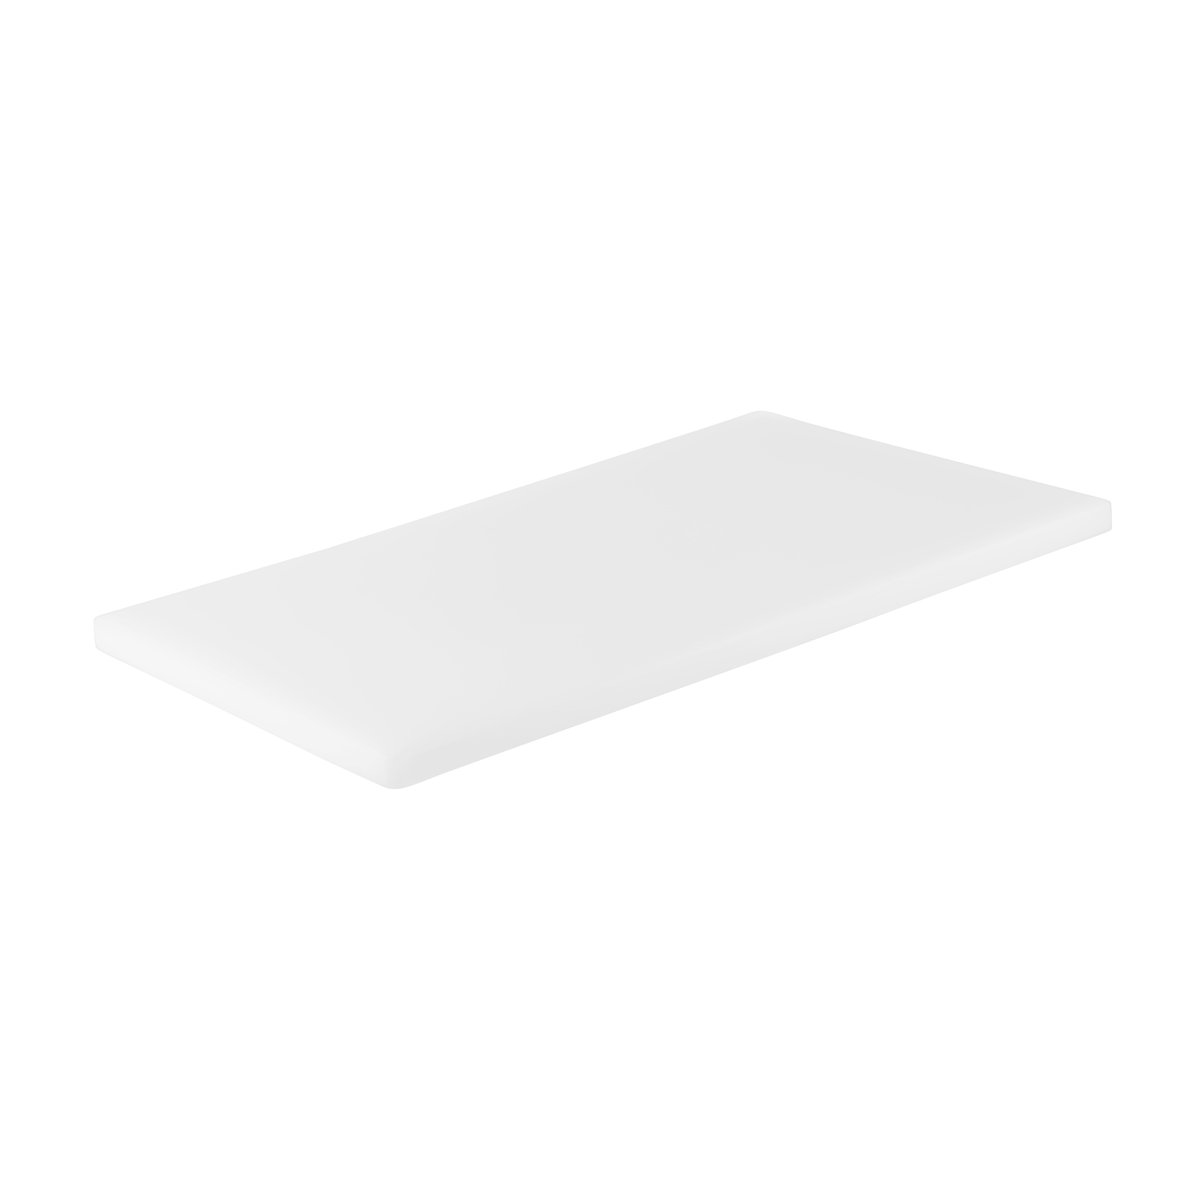 04322 Chef Inox Cutting Board Polyethylene White 450x610x12mm Tomkin Australia Hospitality Supplies